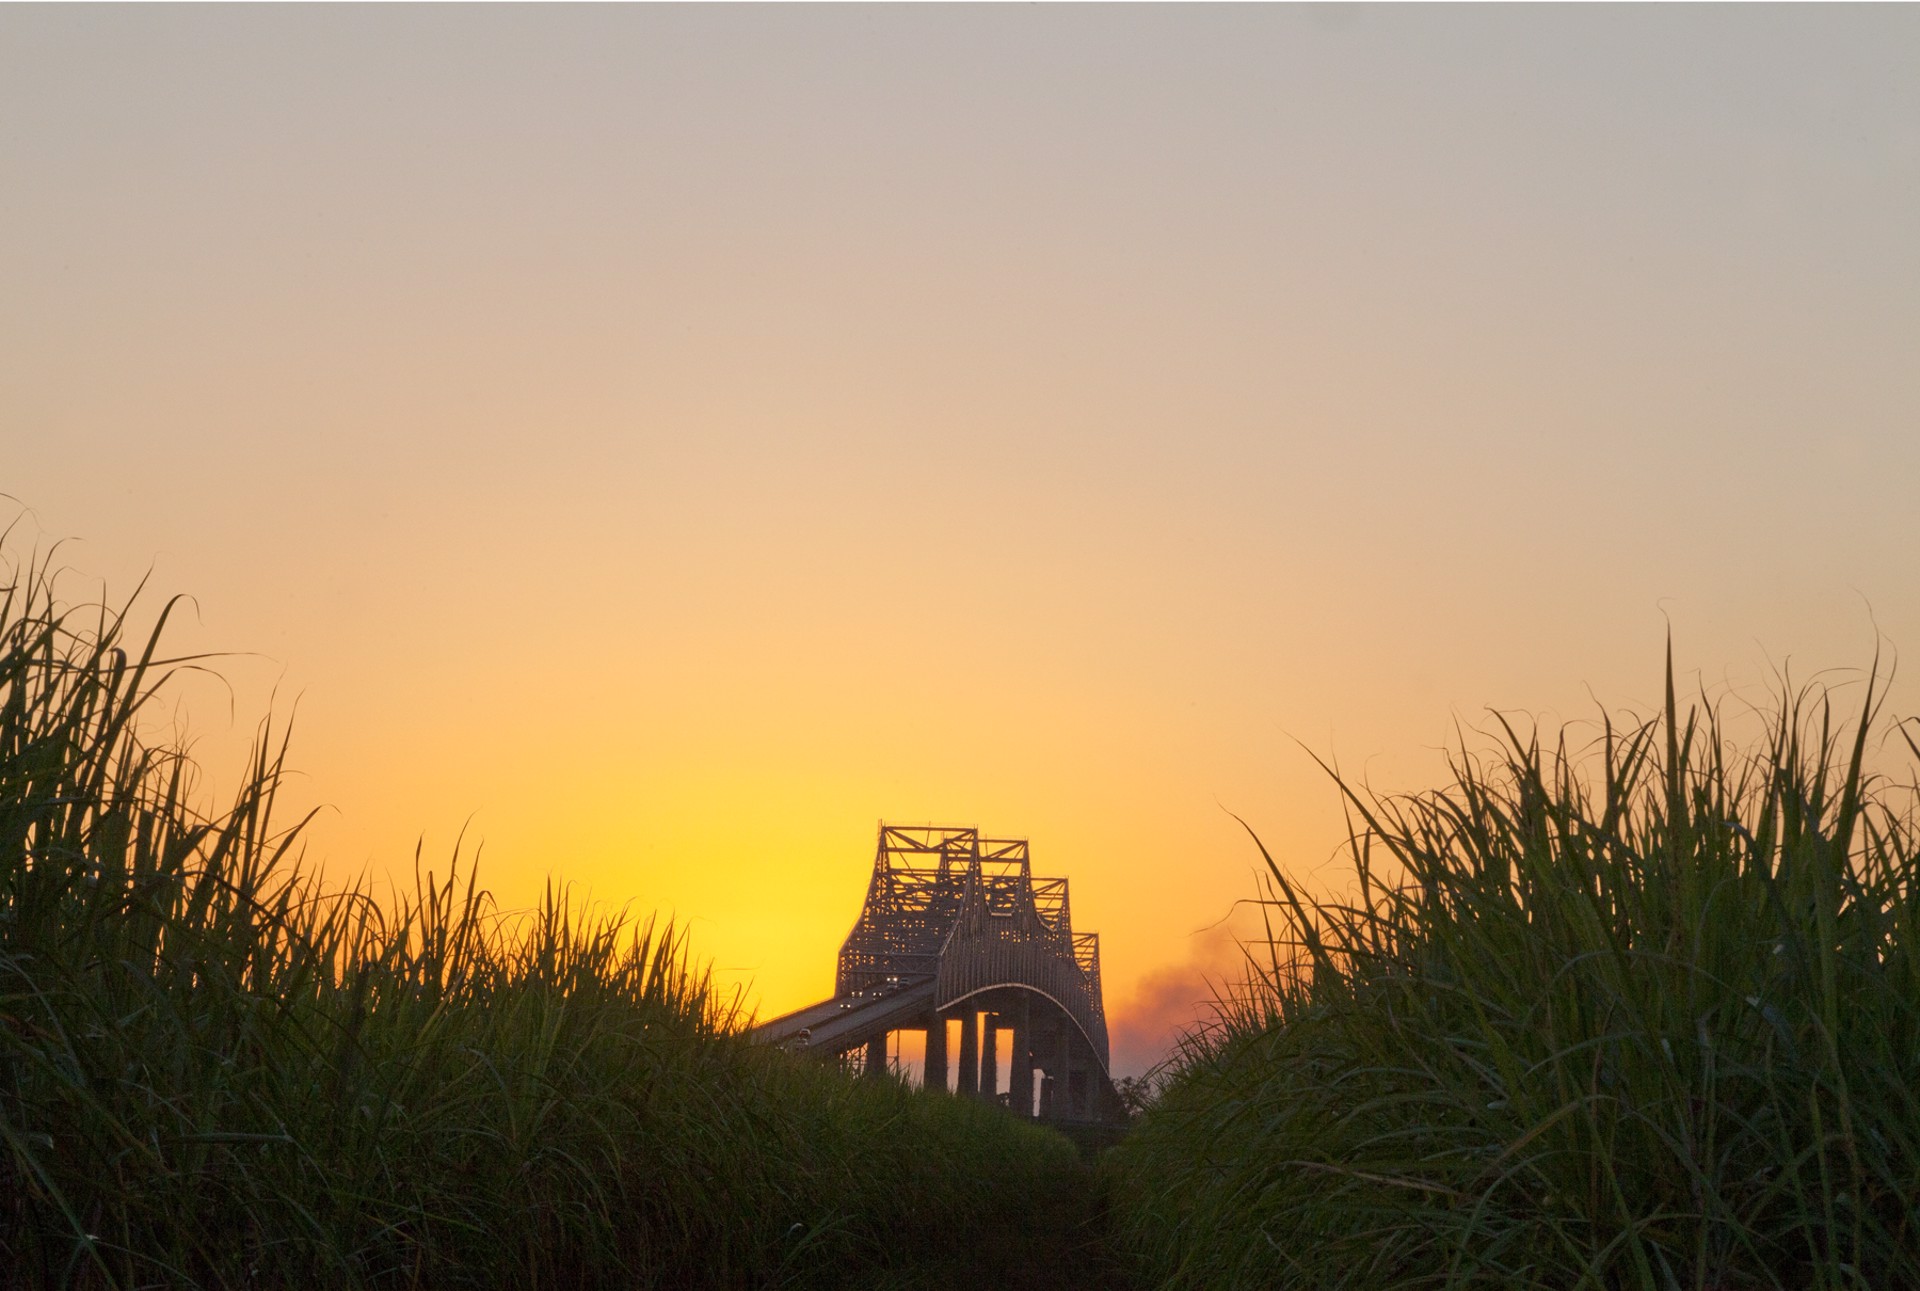 Sunrise Bridge after Sundown (unframed) by Philip Gould